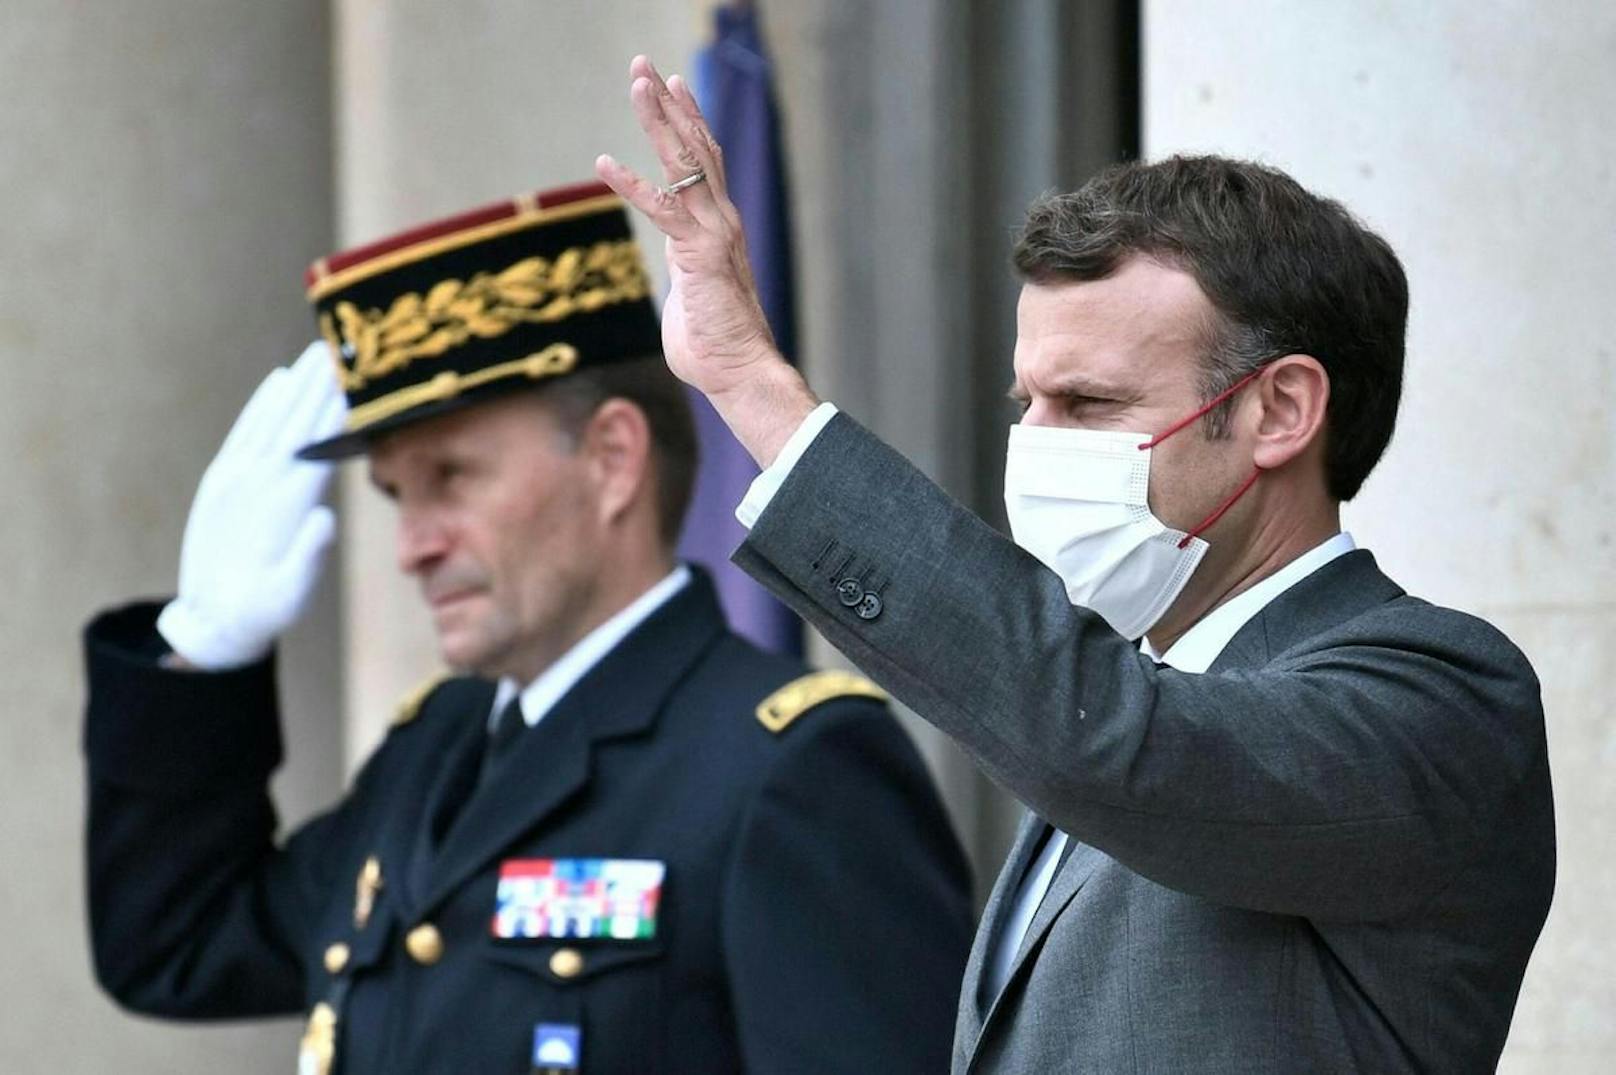 Frankreichs Präsident Emmanuel Macron hat am Sonntag angekündigt, dass bald strengere Corona-Maßnahmen erlassen werden.